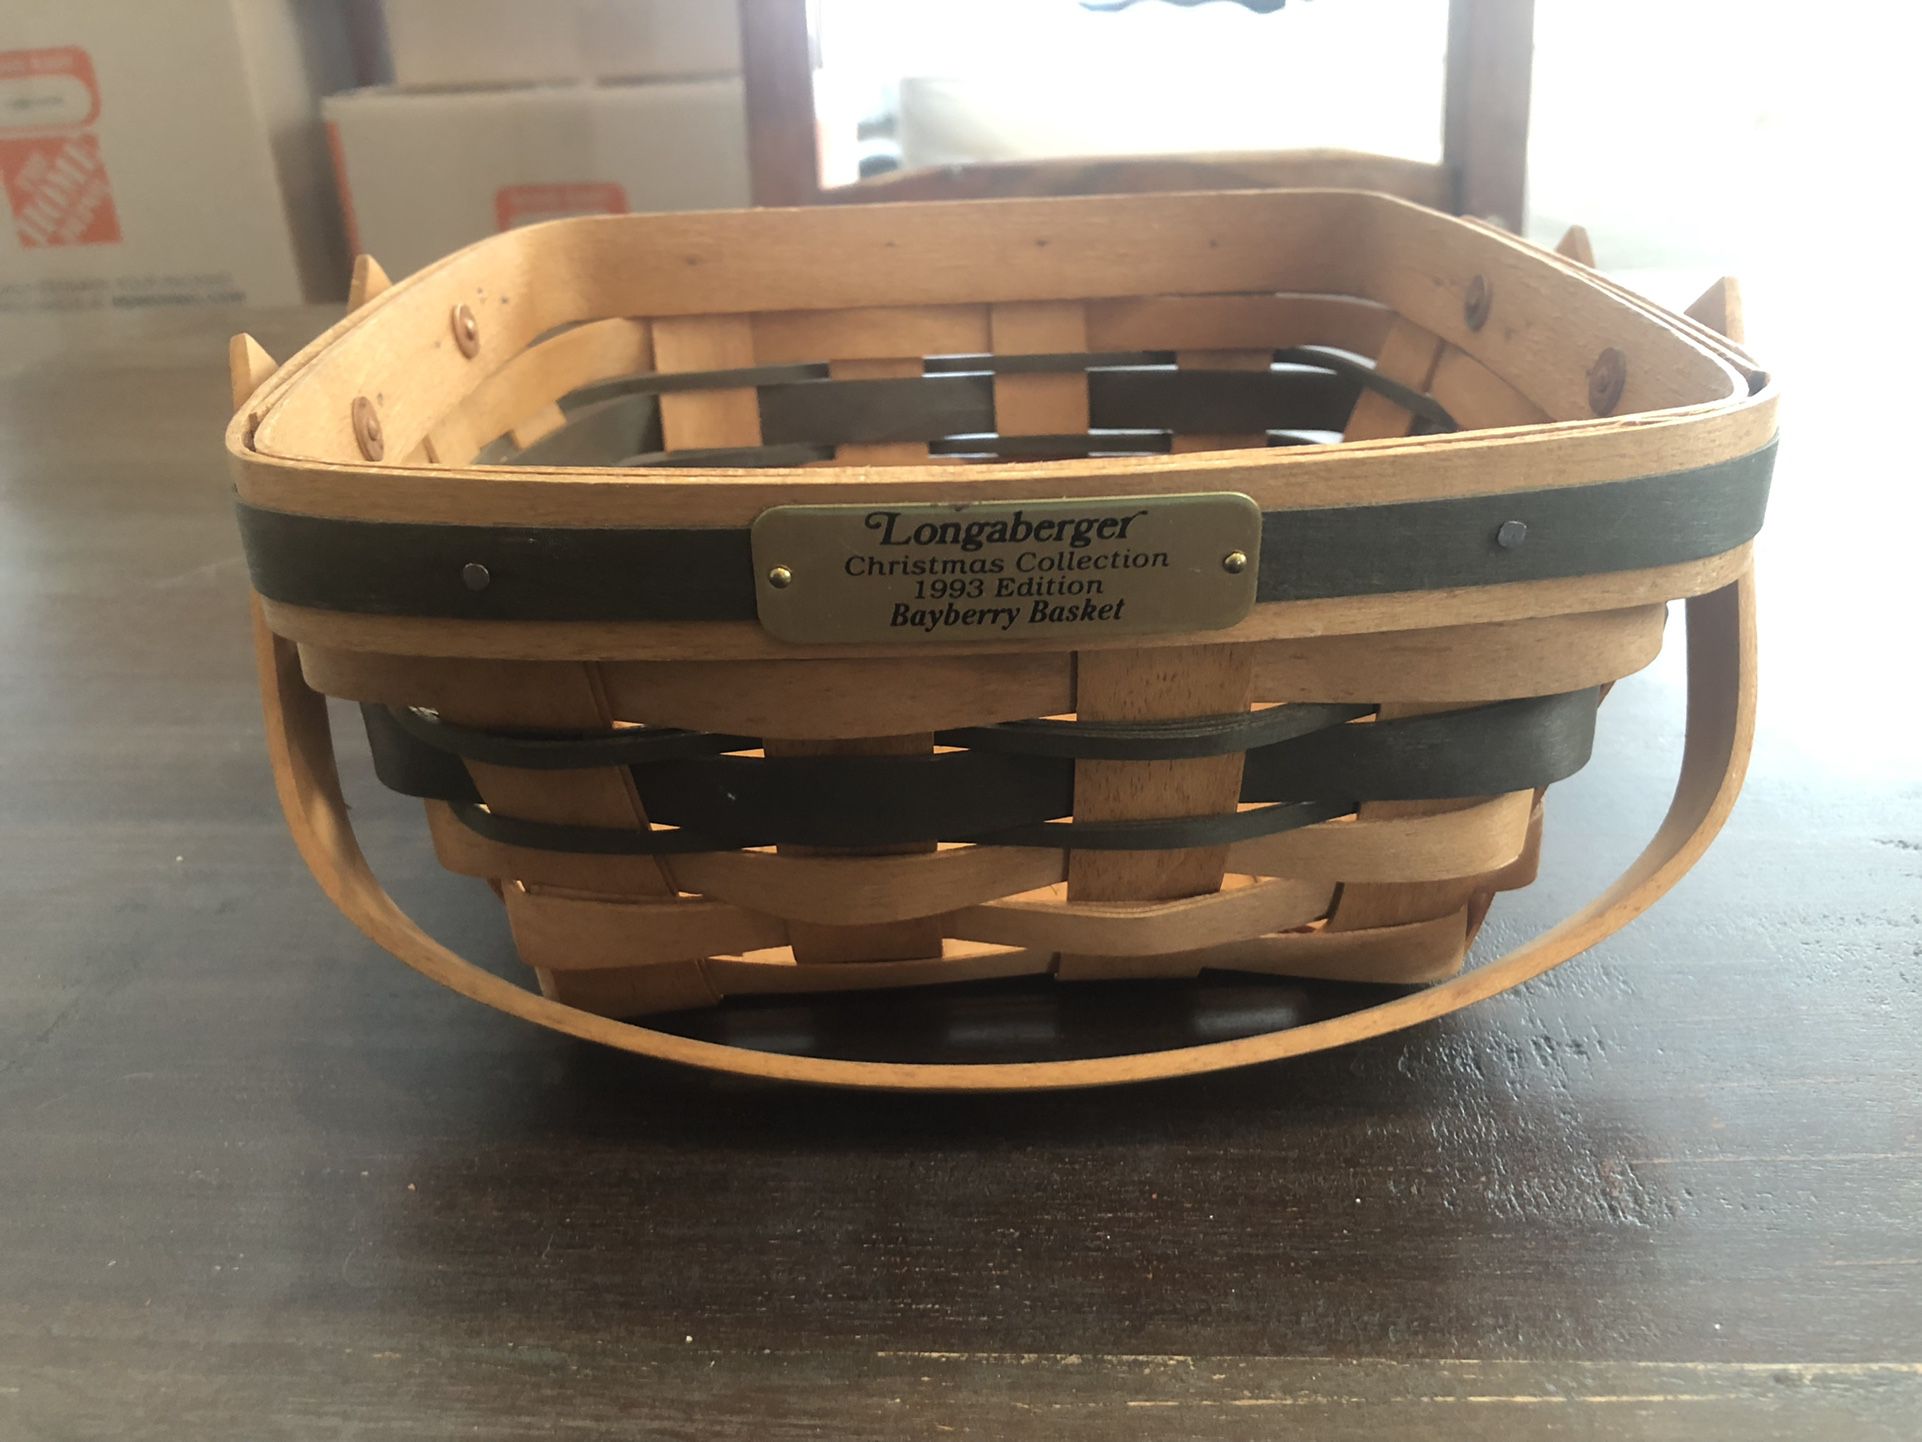 Longaberger Christmas Collection Basket - 1993 Edition